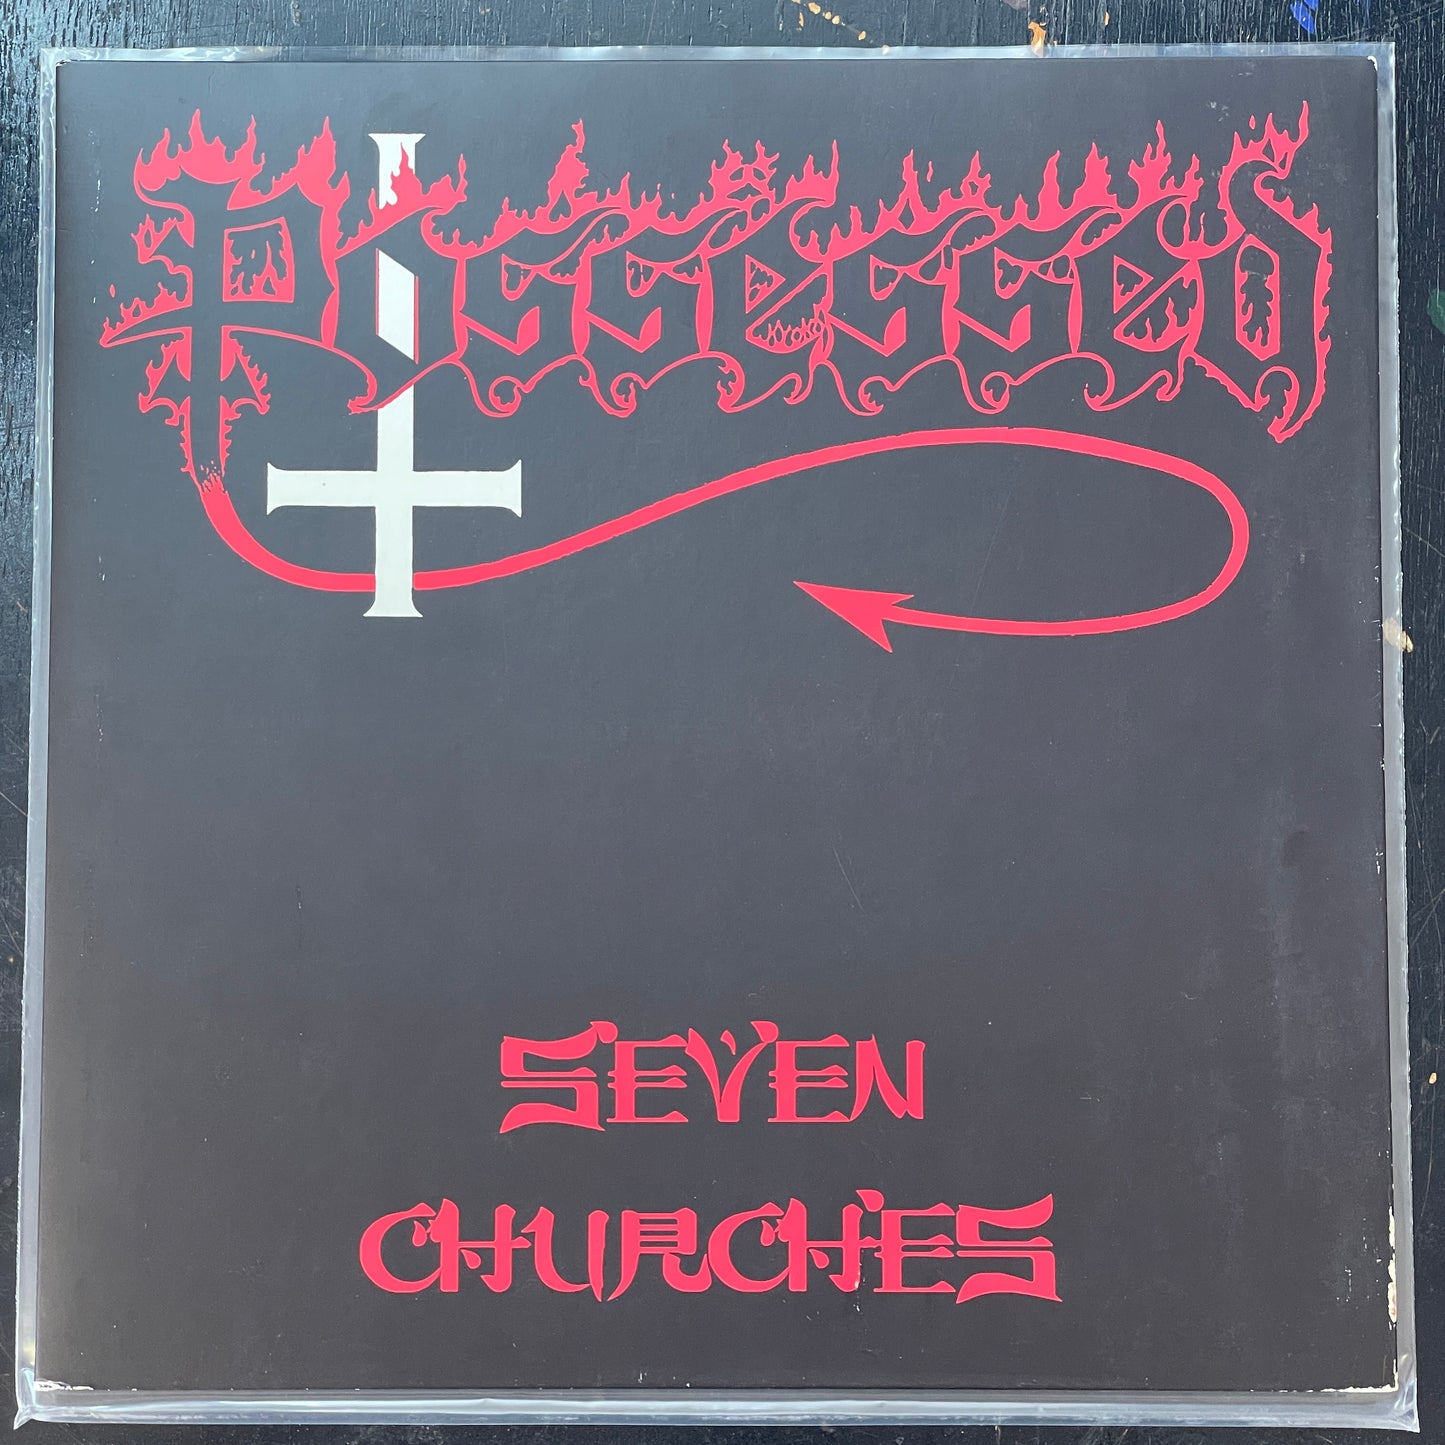 Possessed - Seven Churches 2009 reissue LP (used)